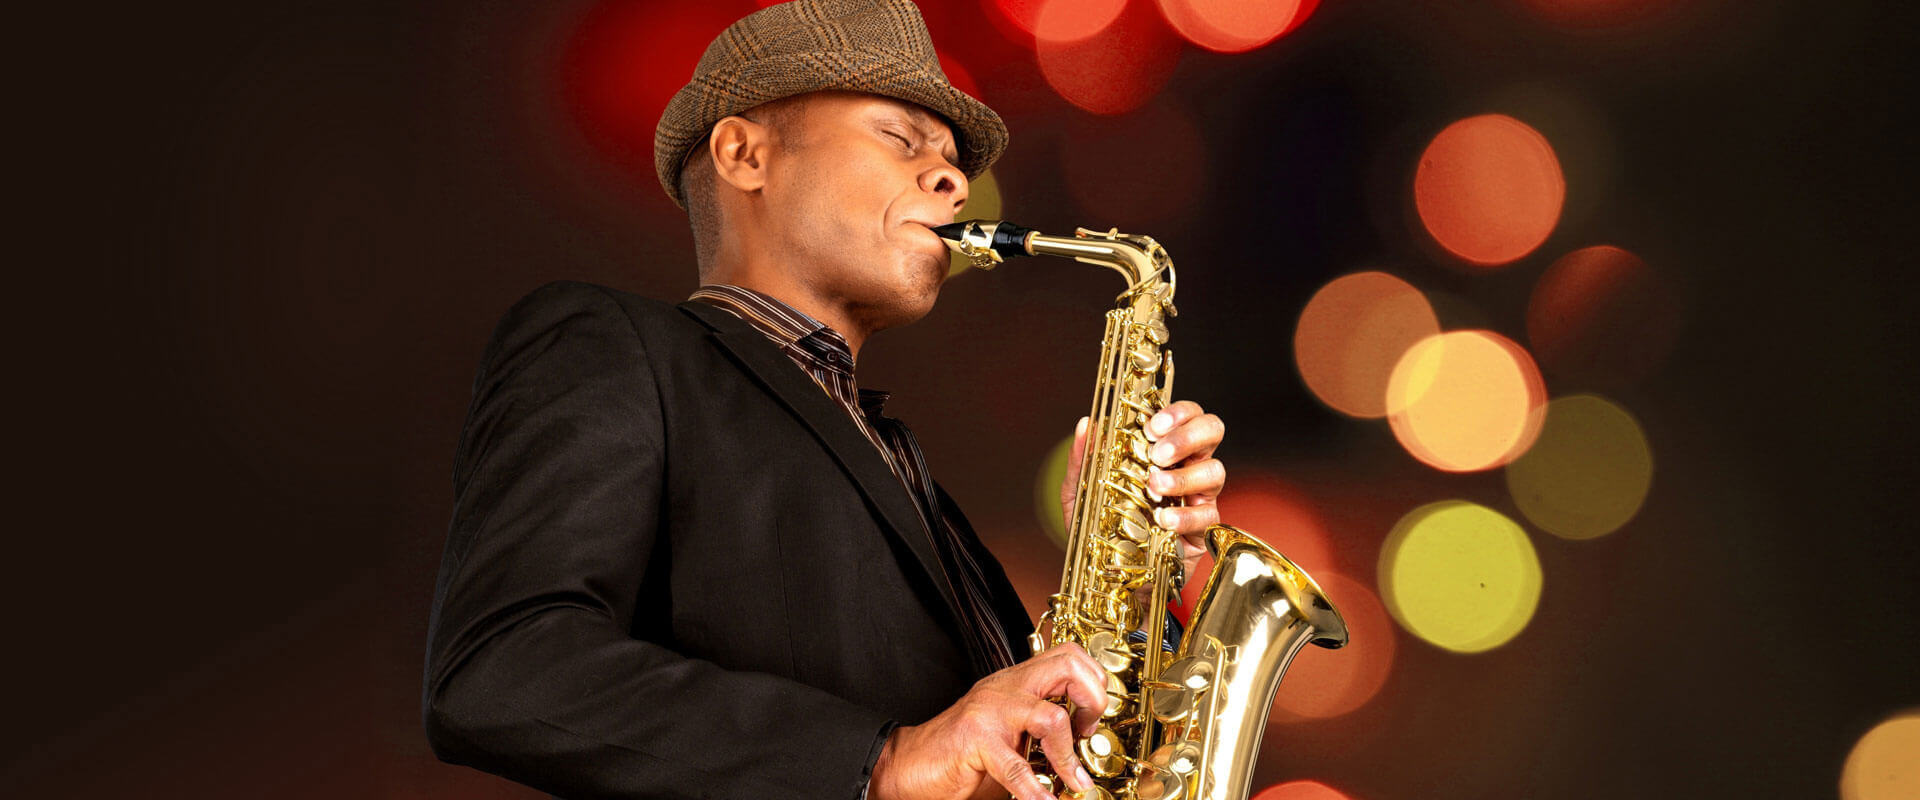 Saxophone Lessons Philadelphia, PA